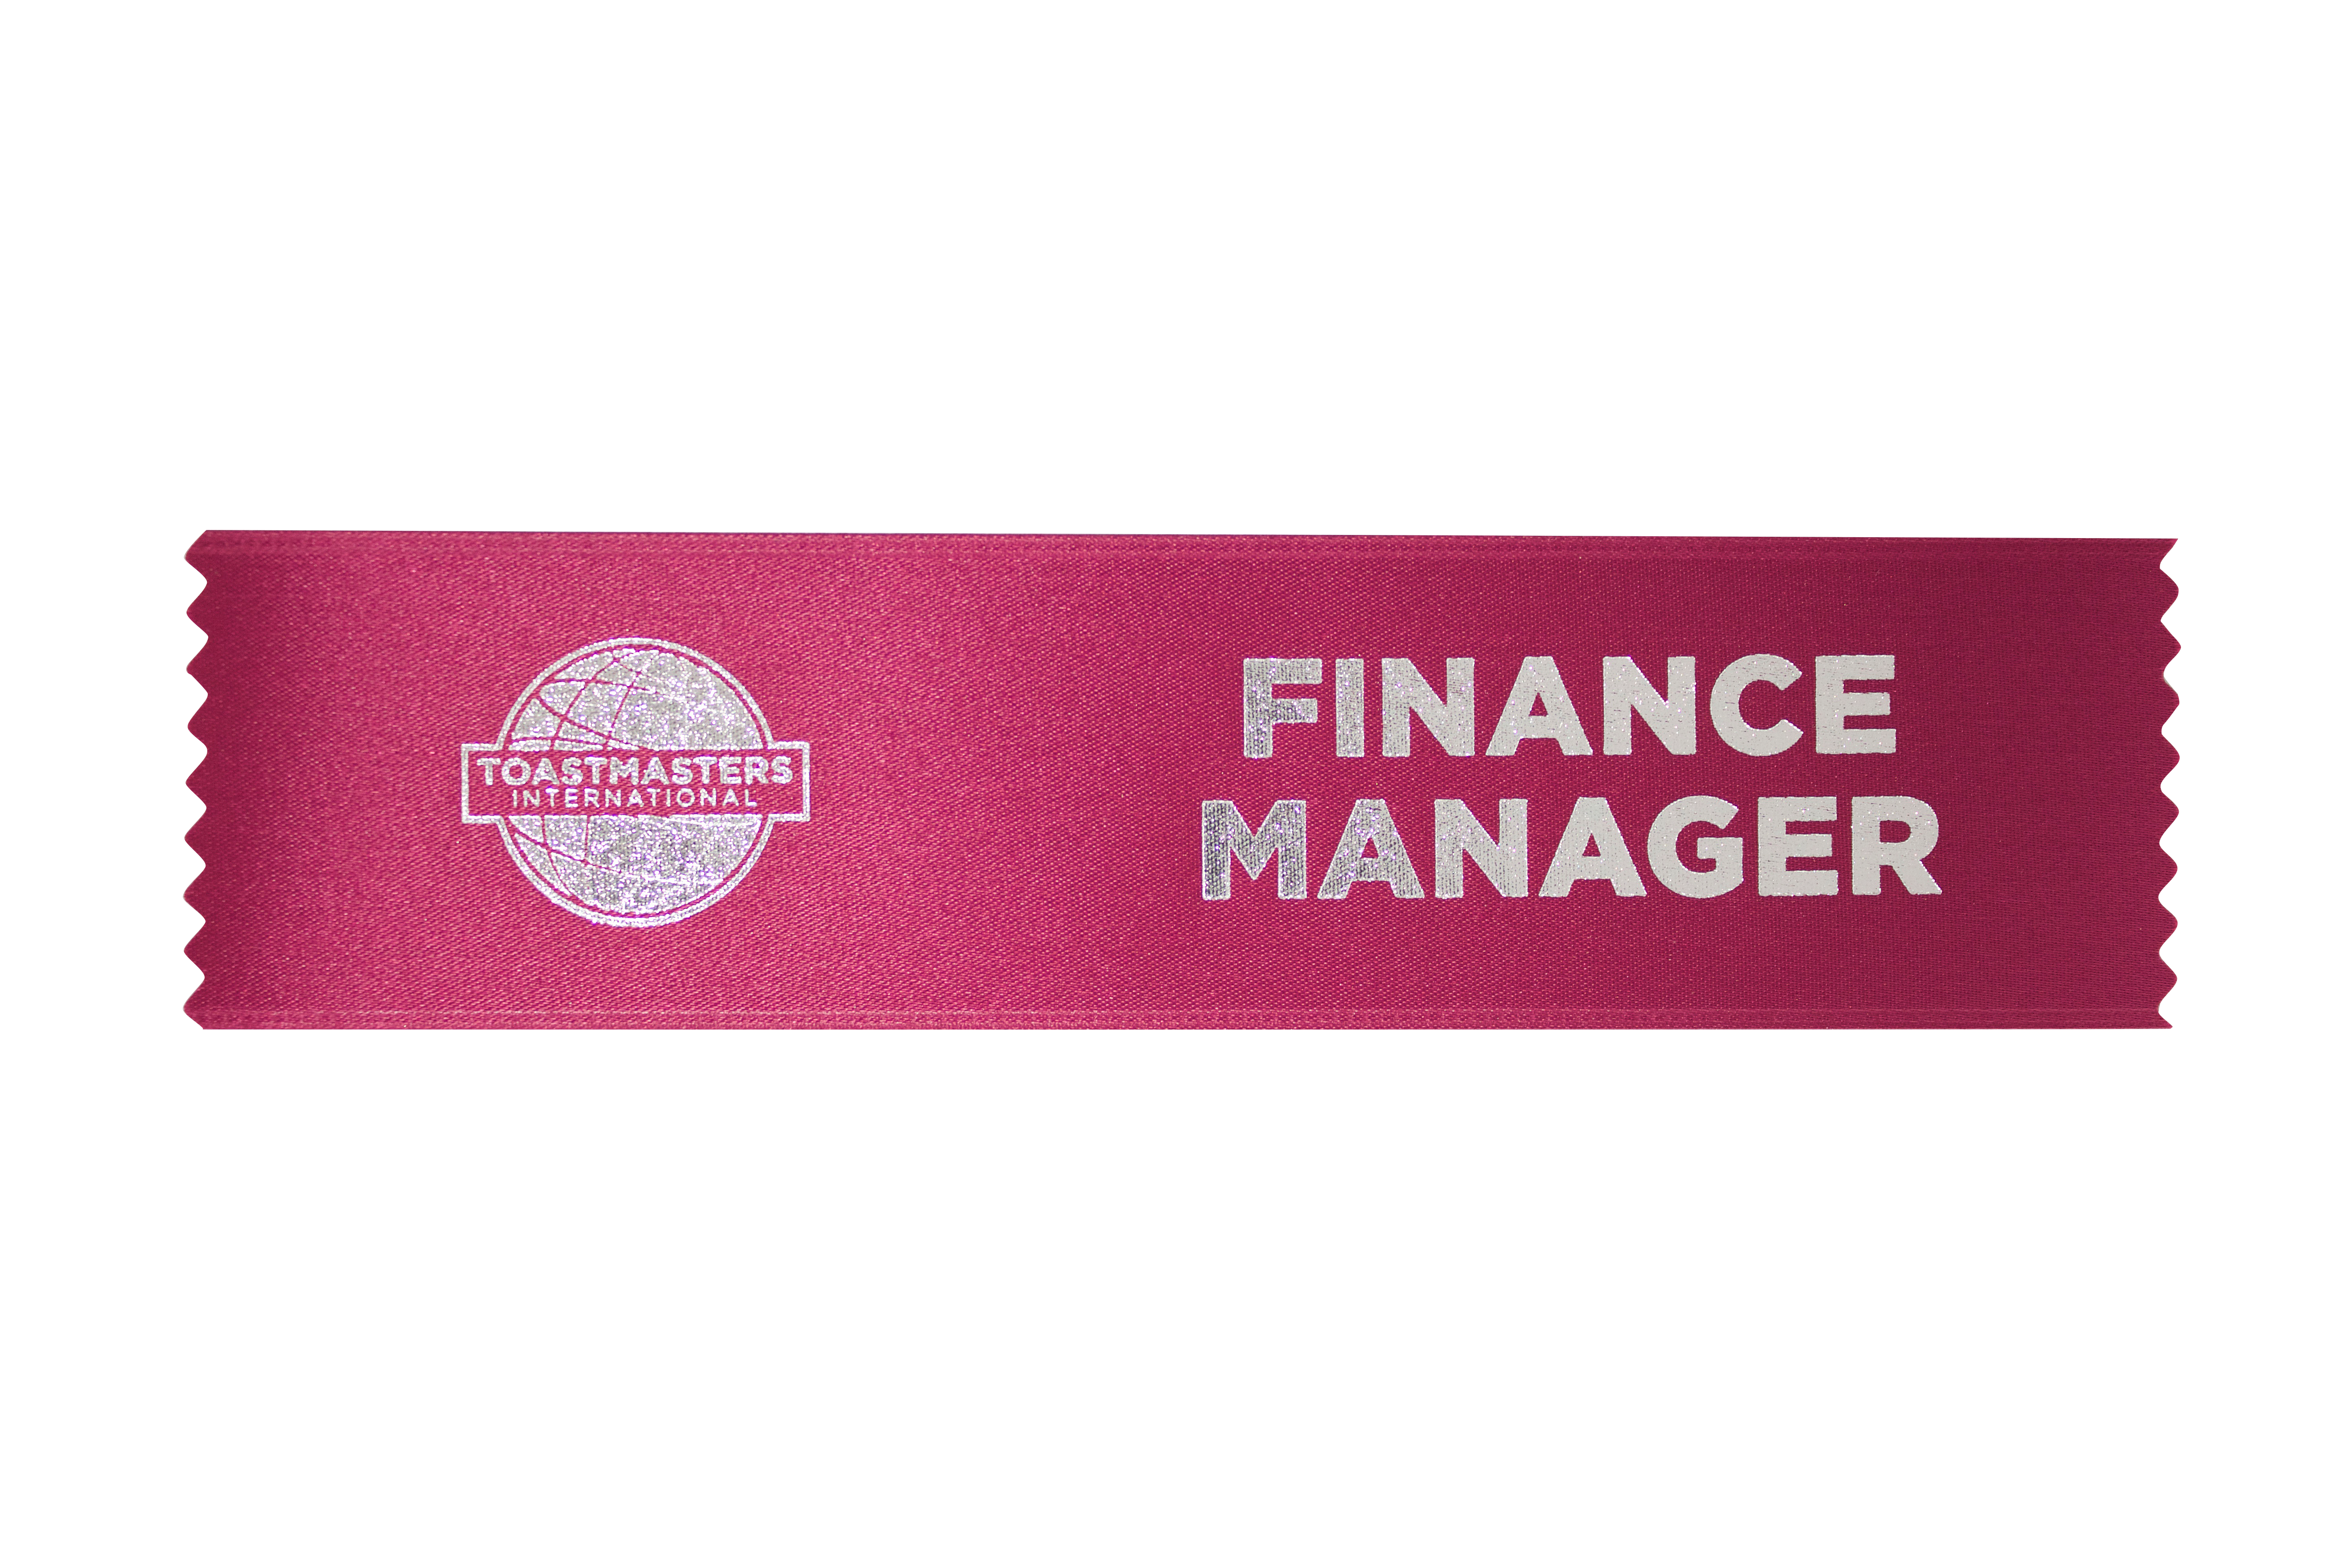 Finance Manager Ribbon